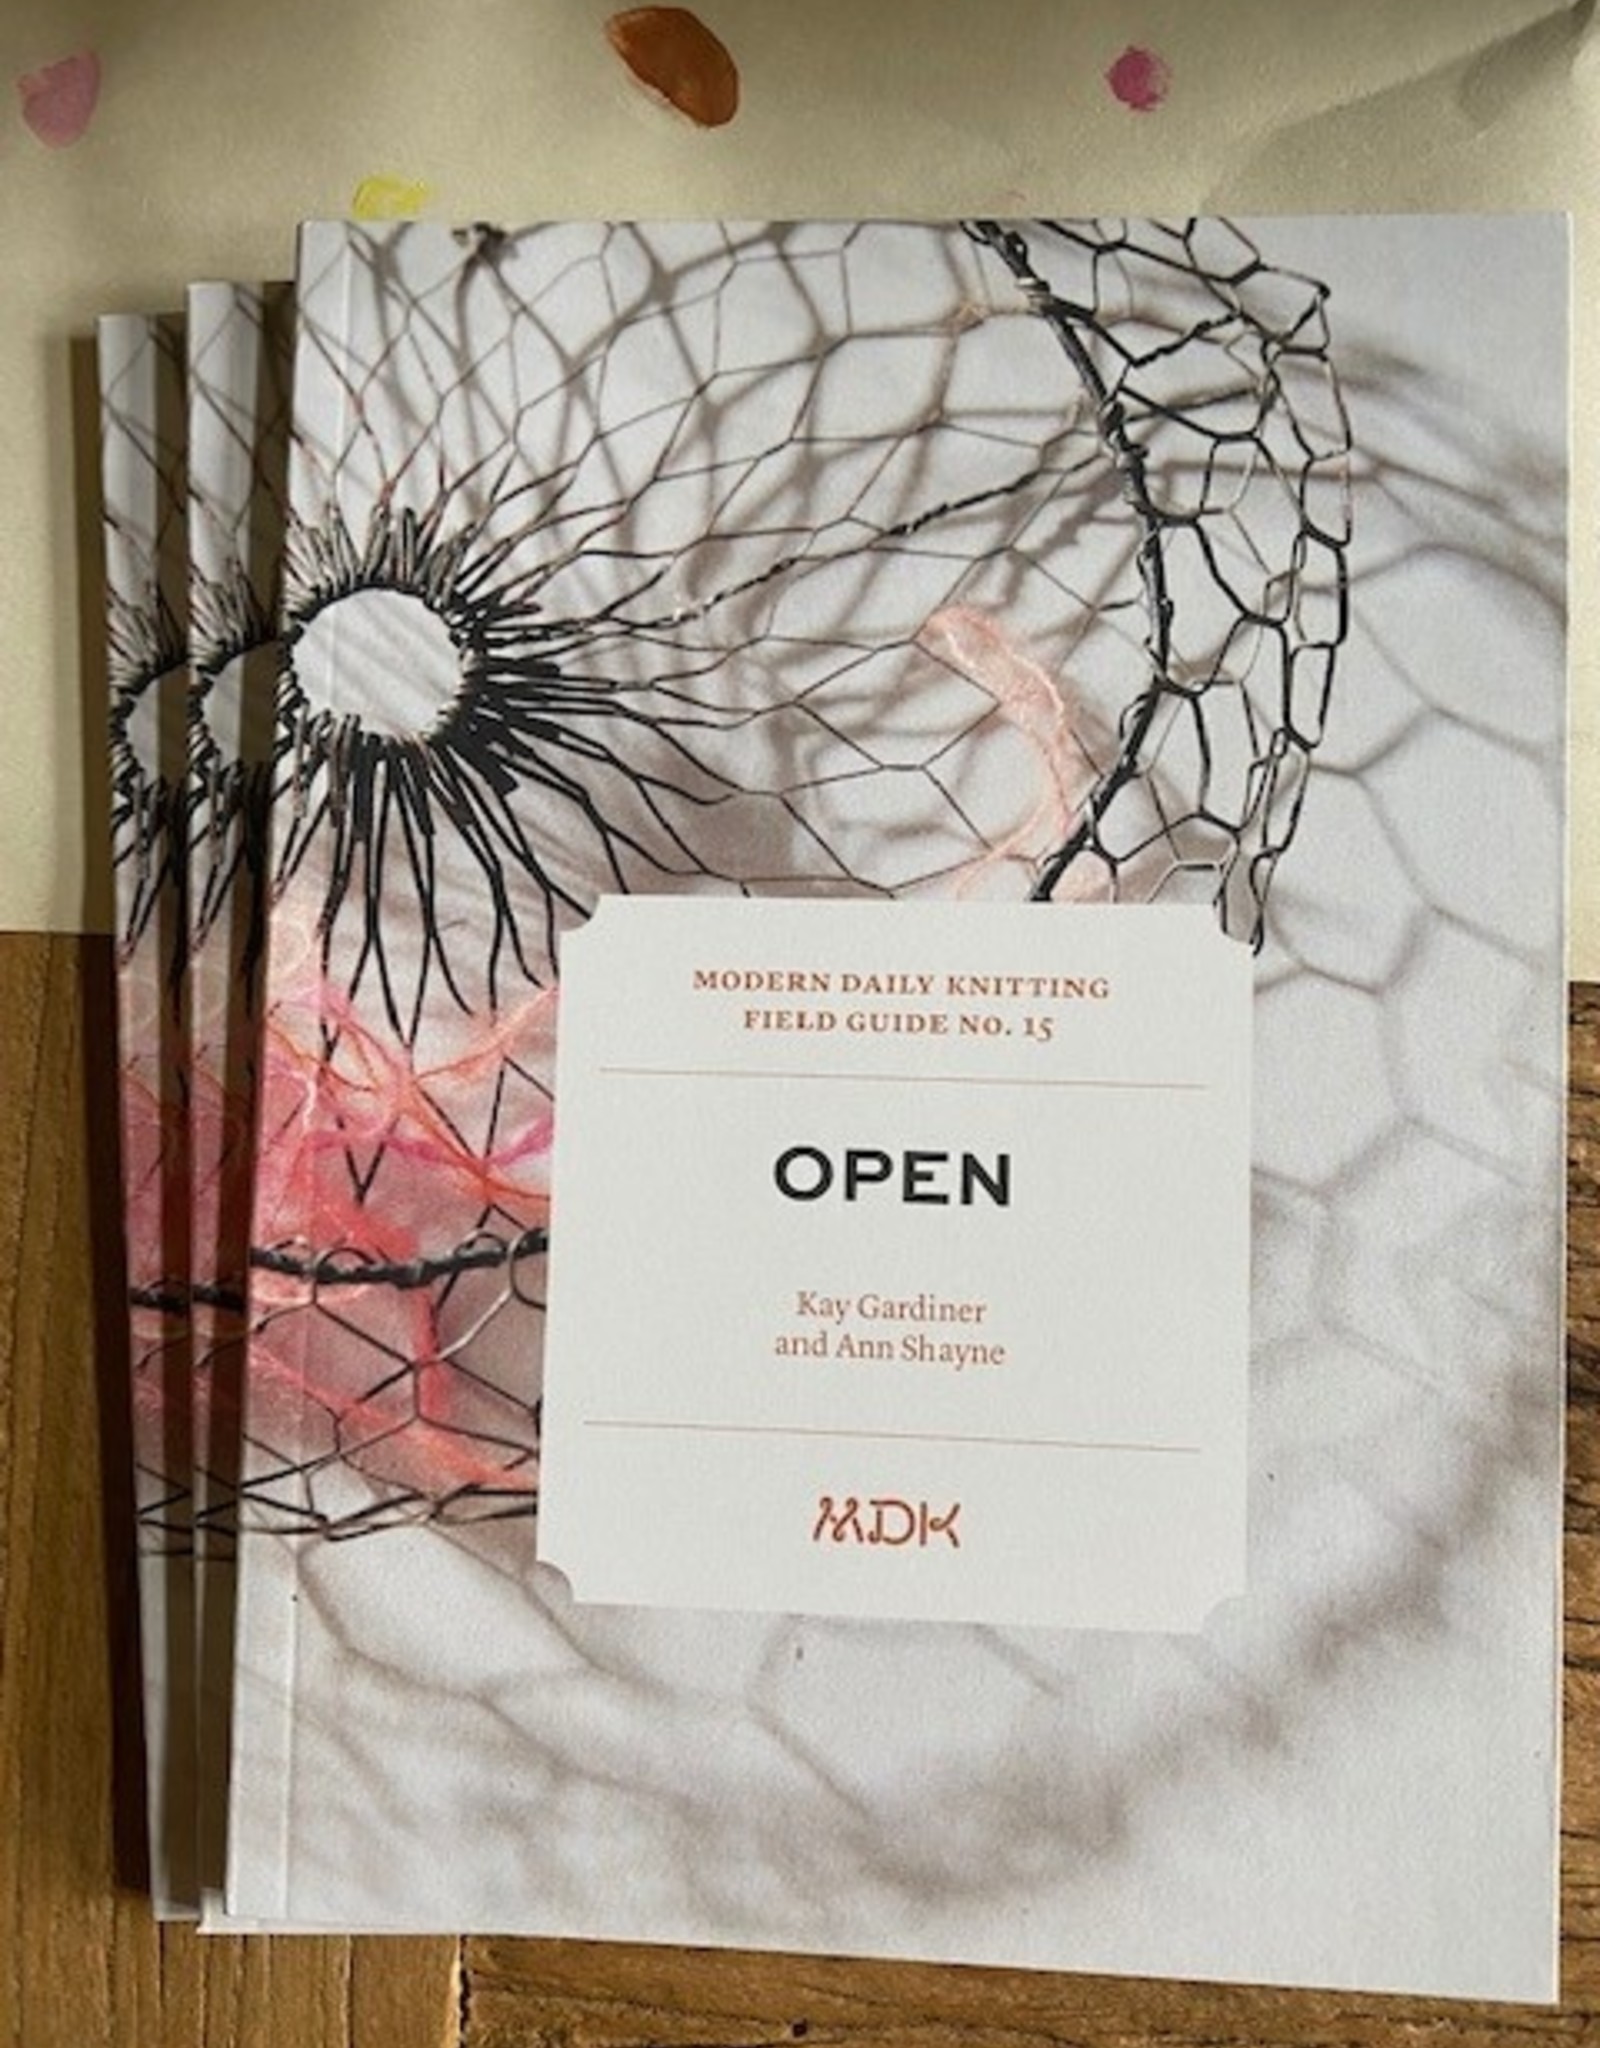 Modern Daily Knitting Field Guide No. 15 Open